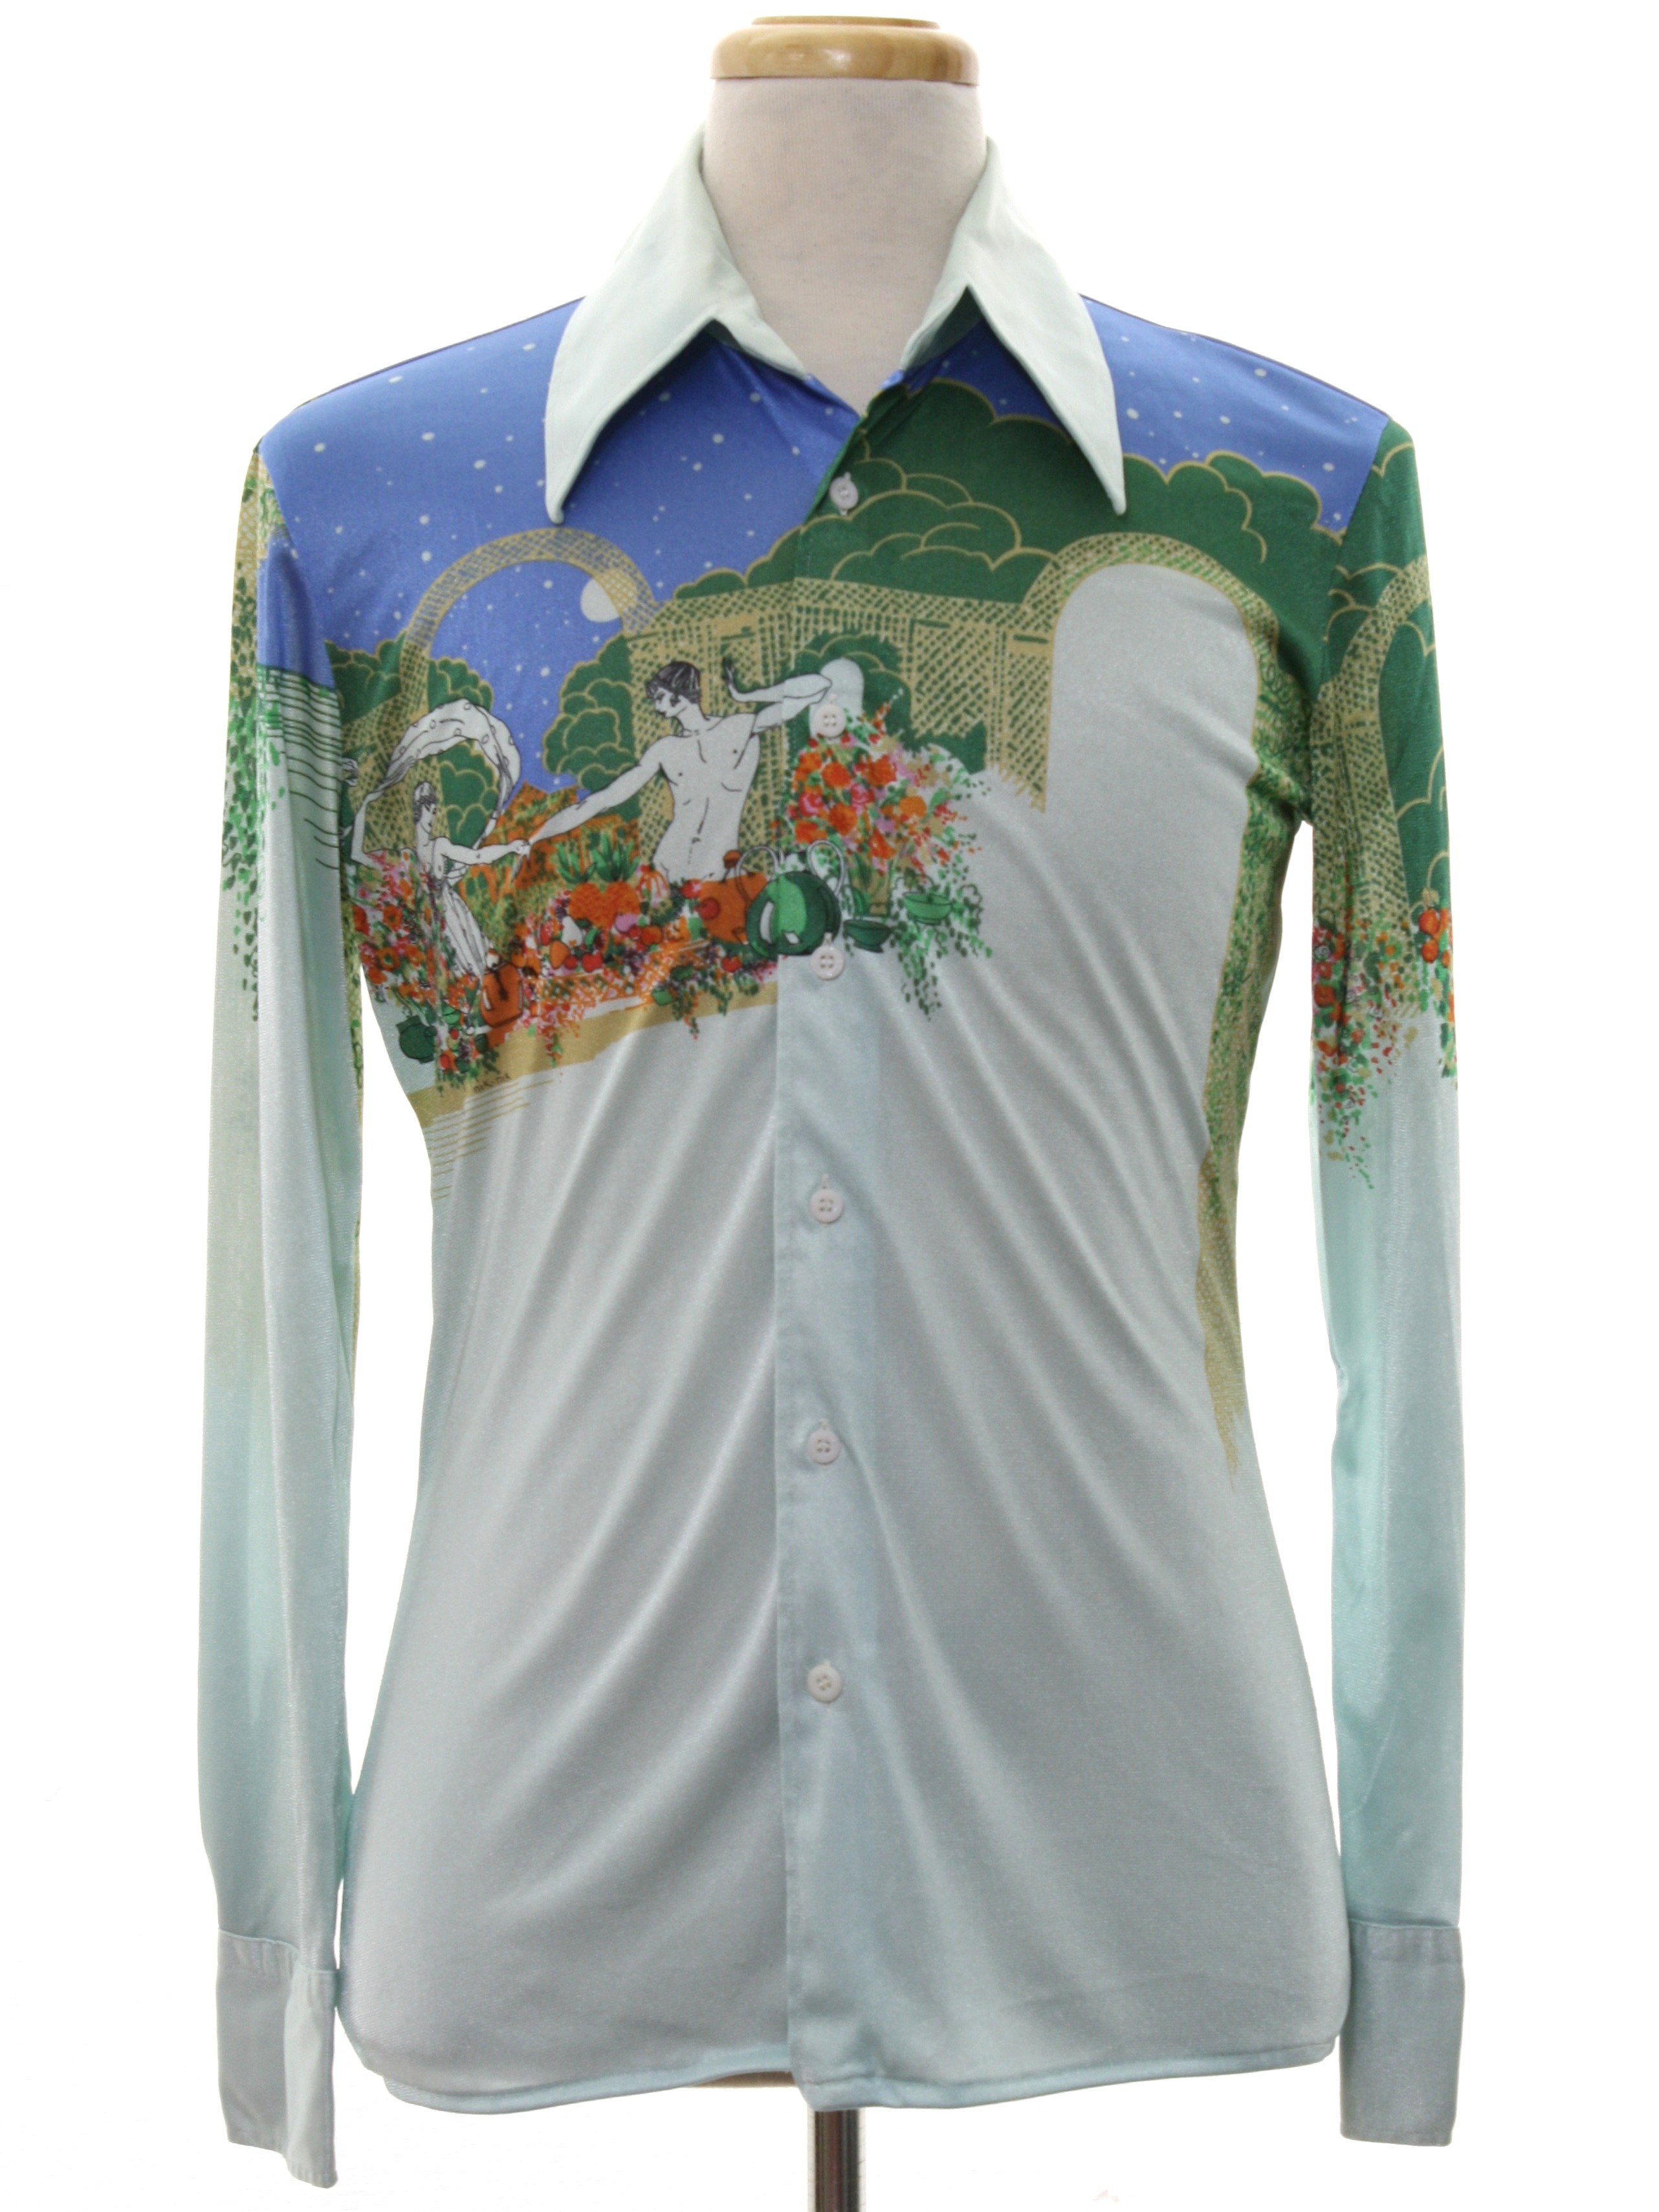 Nik Nik 1970s Vintage Print Disco Shirt: 70s -Nik Nik- Mens shiny light  blue background nylon button cuff longsleeve button up front print disco  shirt with shades of green, blue, orange, pink